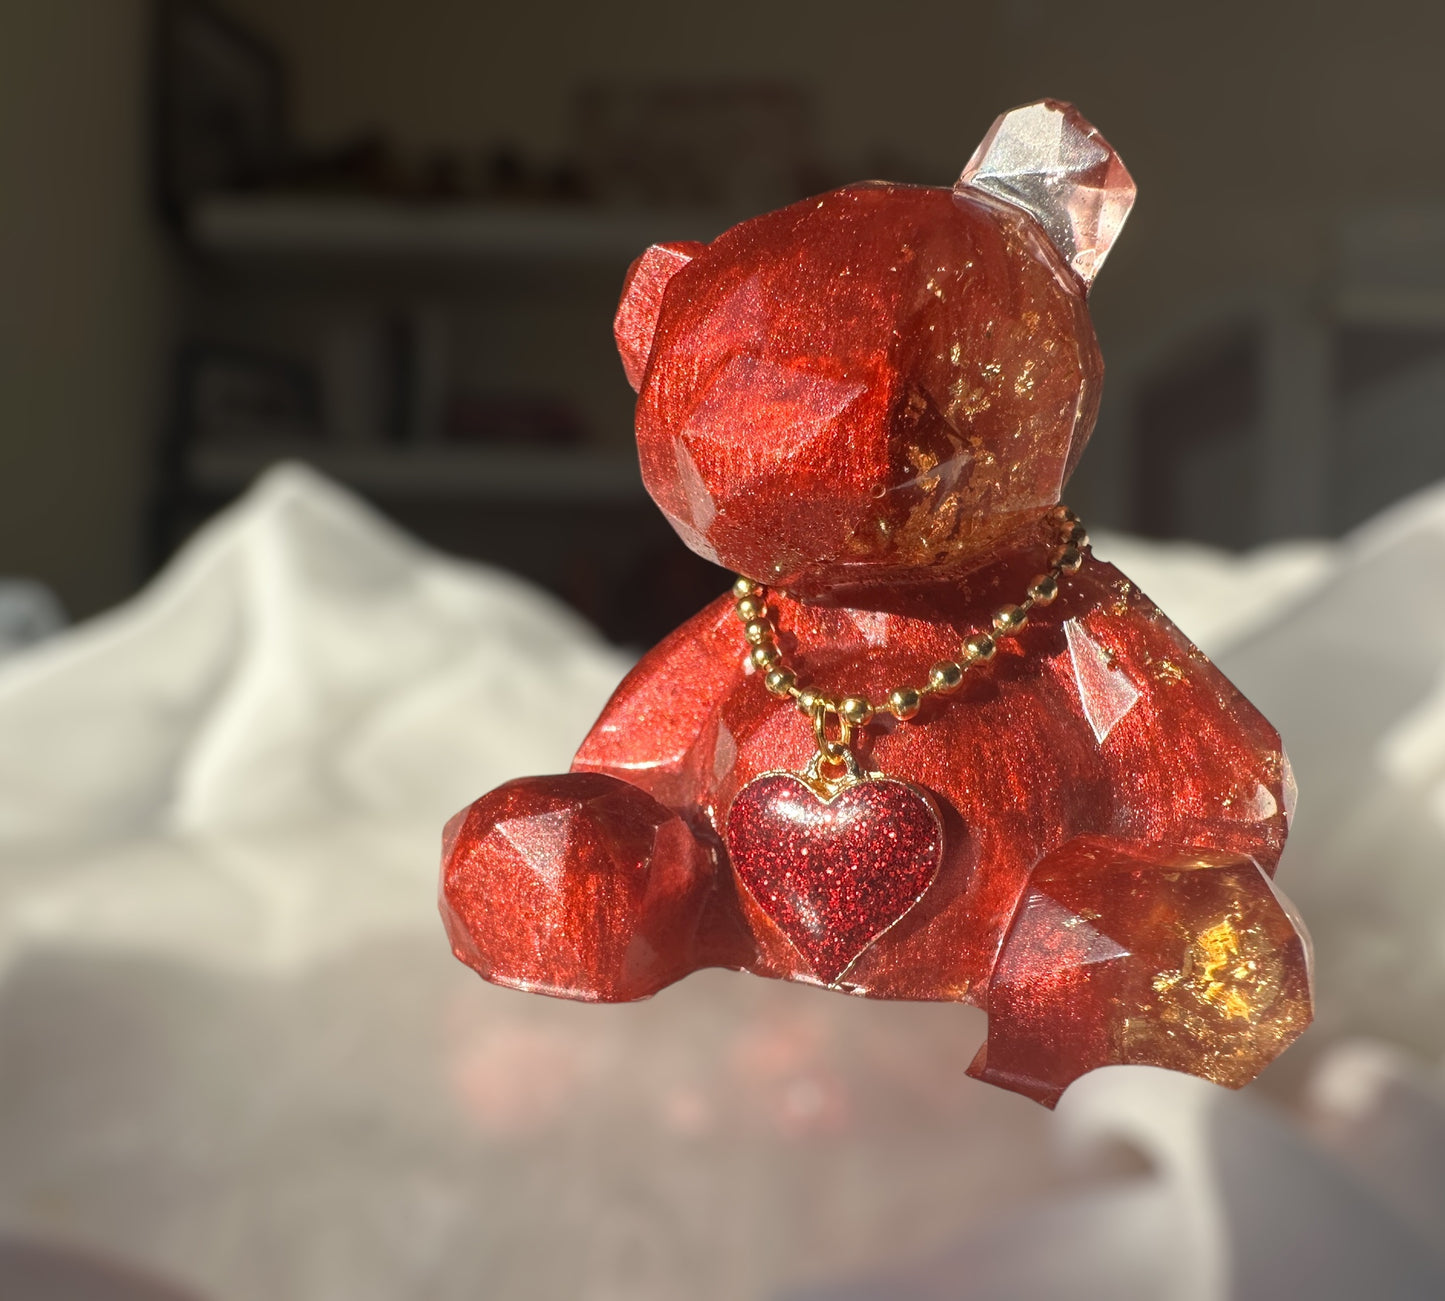 Charming Bears - Whimsical Resin Geometric Bear Decor with Charms